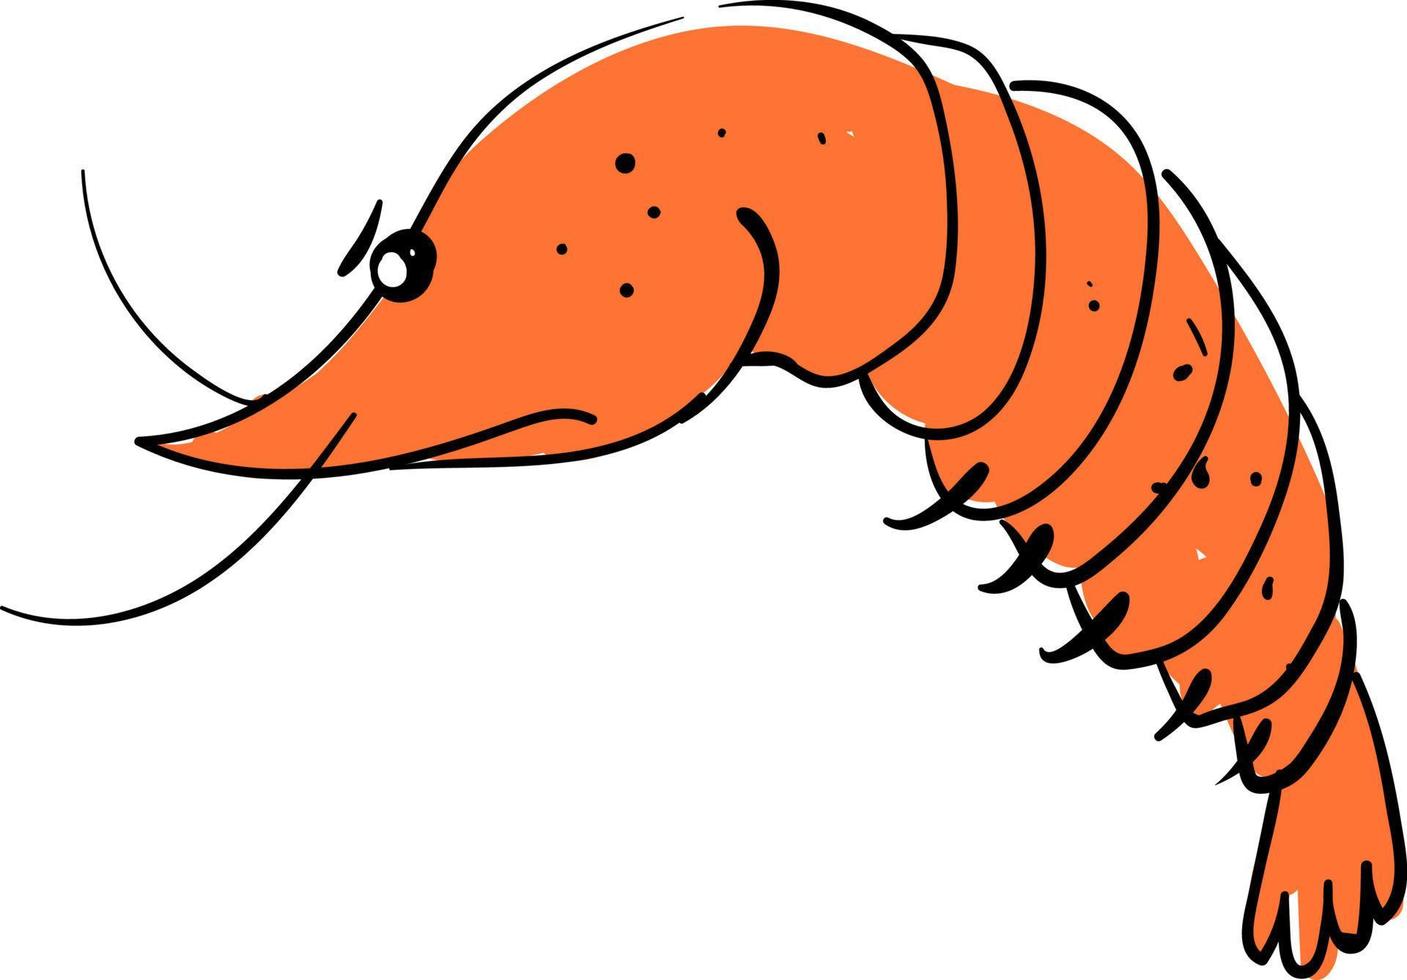 Angry shrimp, illustration, vector on white background.